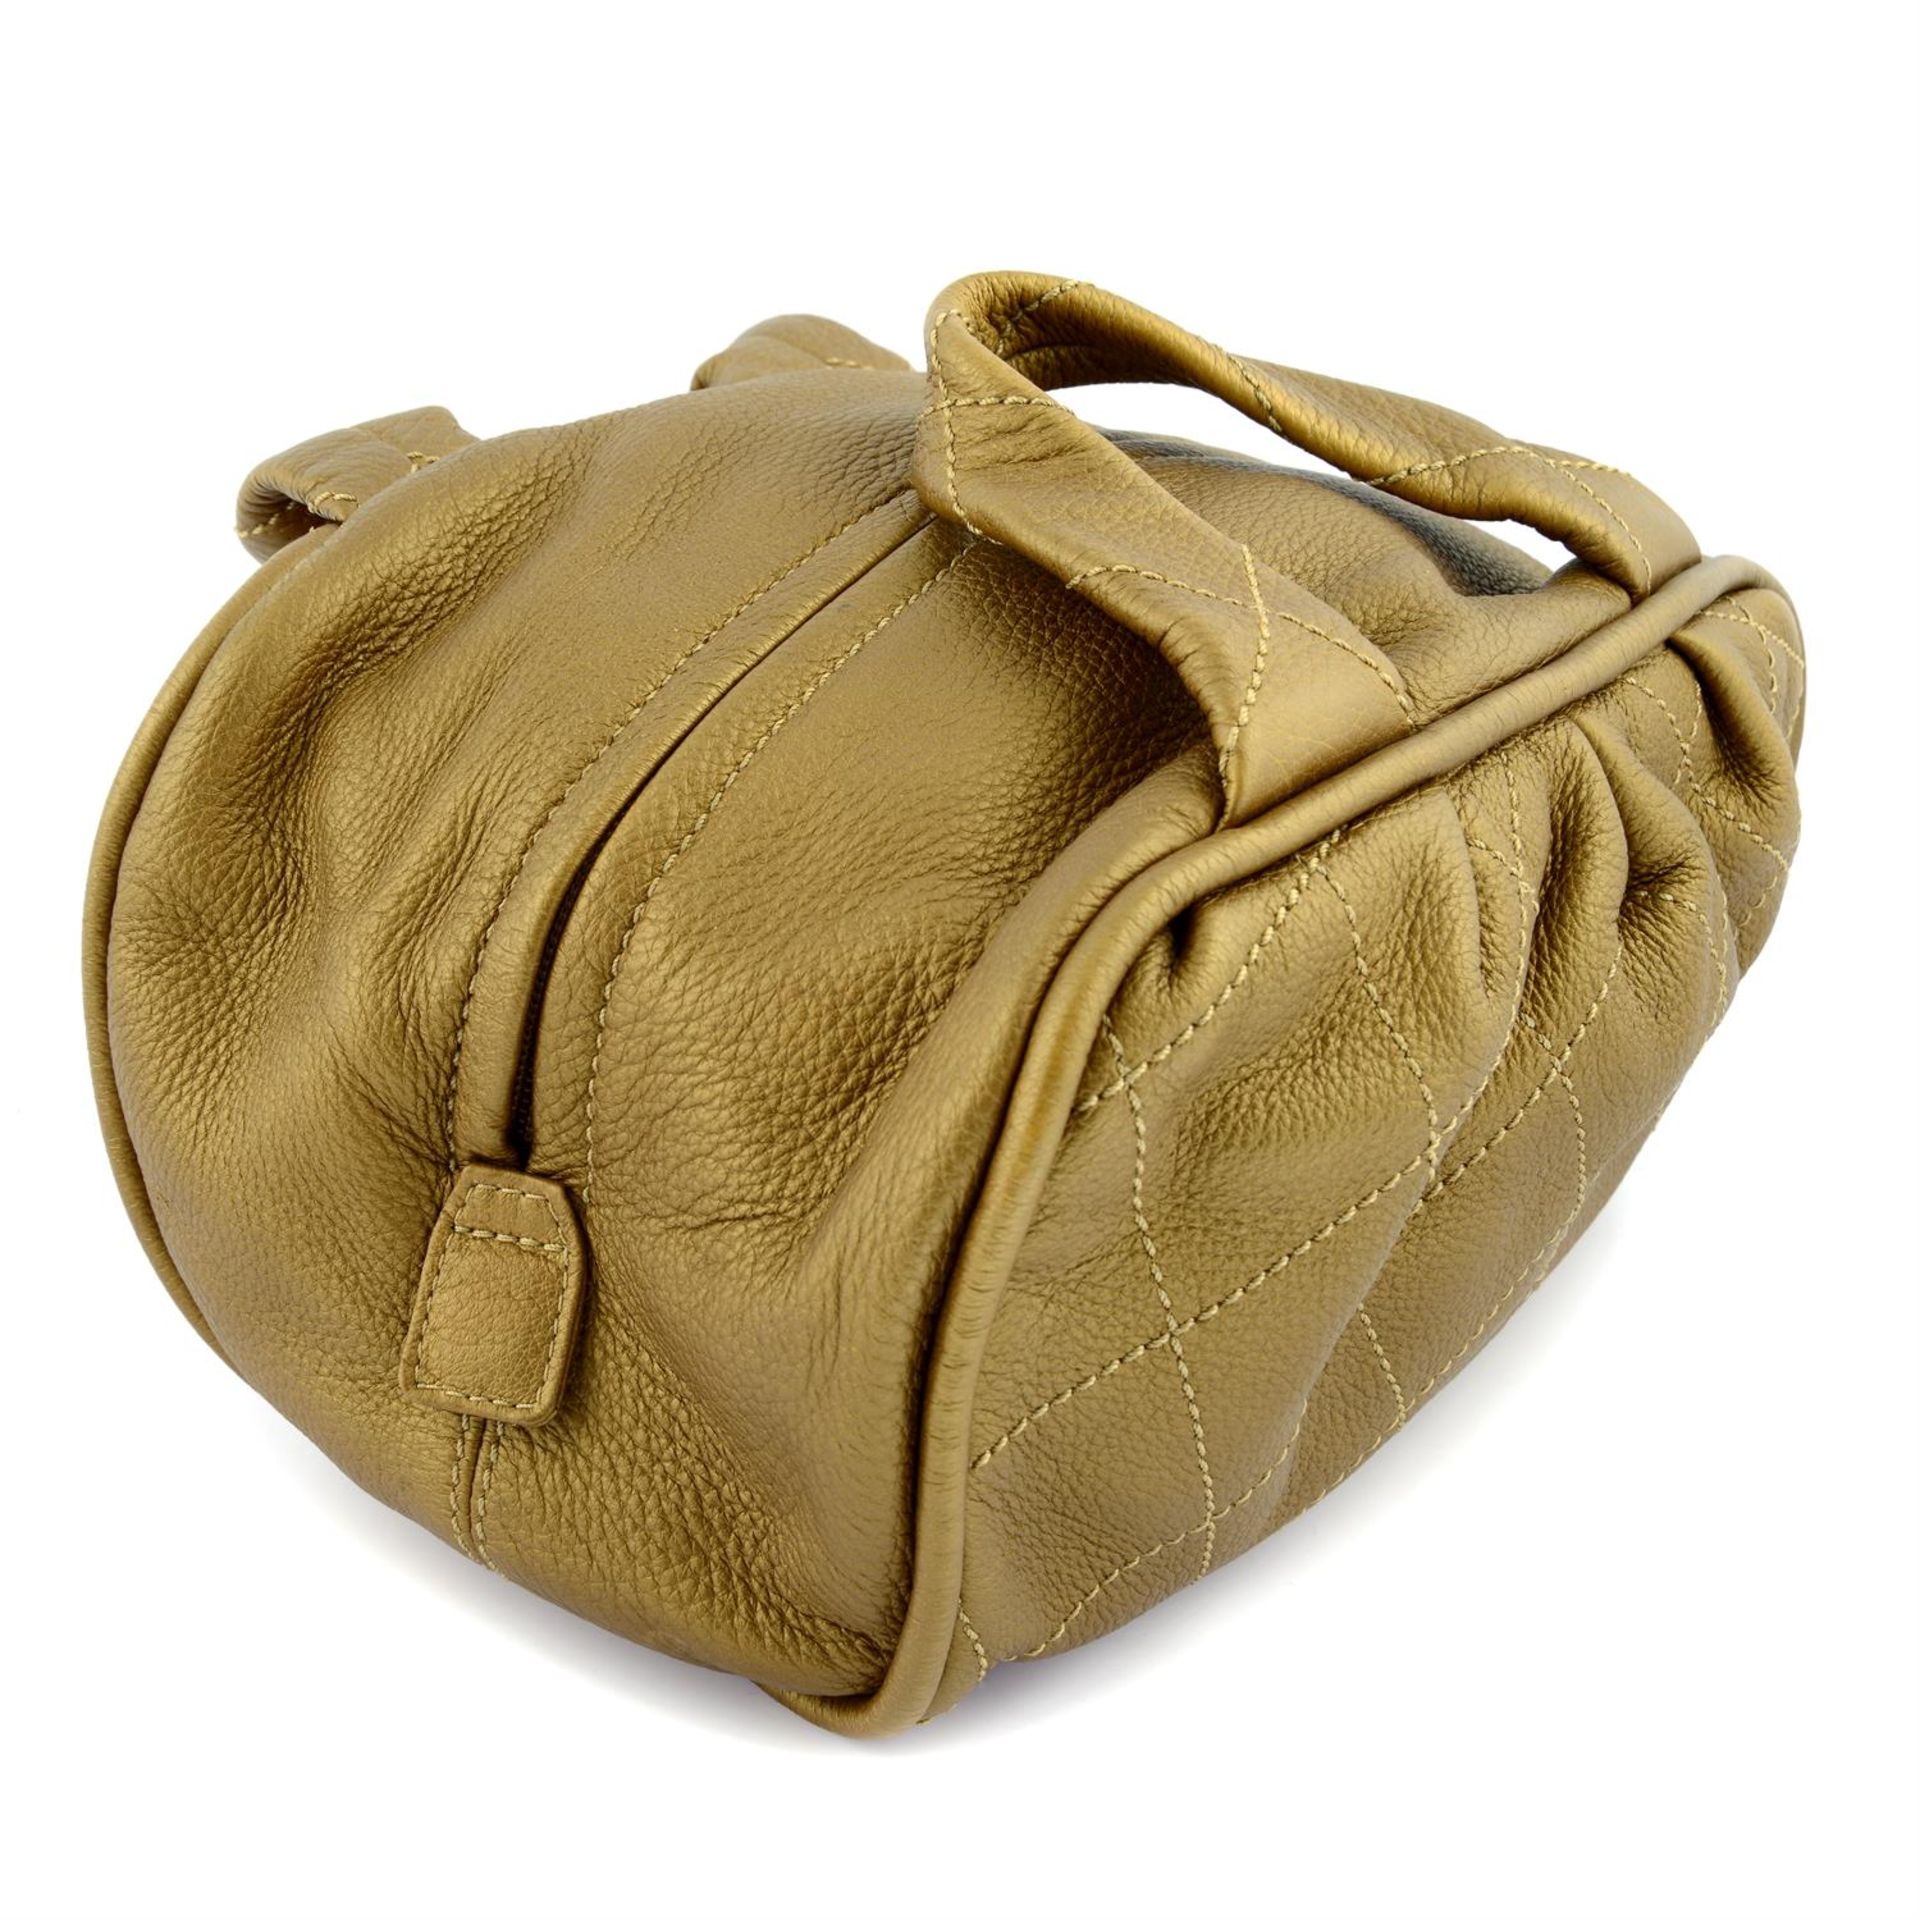 CHANEL - a gold-tone leather handbag. - Image 4 of 5